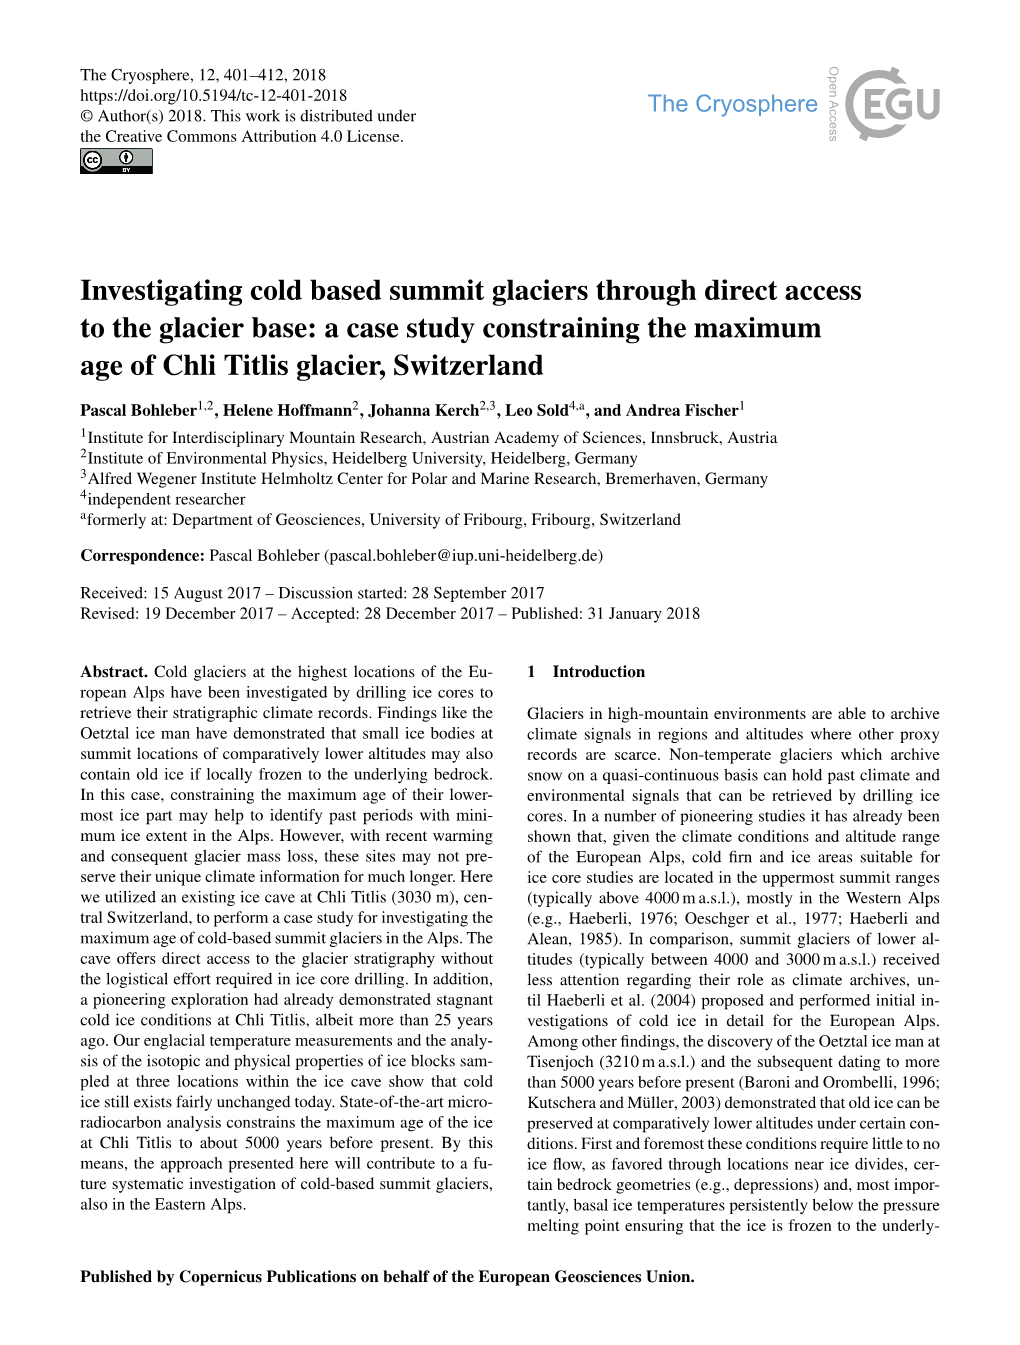 A Case Study Constraining the Maximum Age of Chli Titlis Glacier, Switzerland